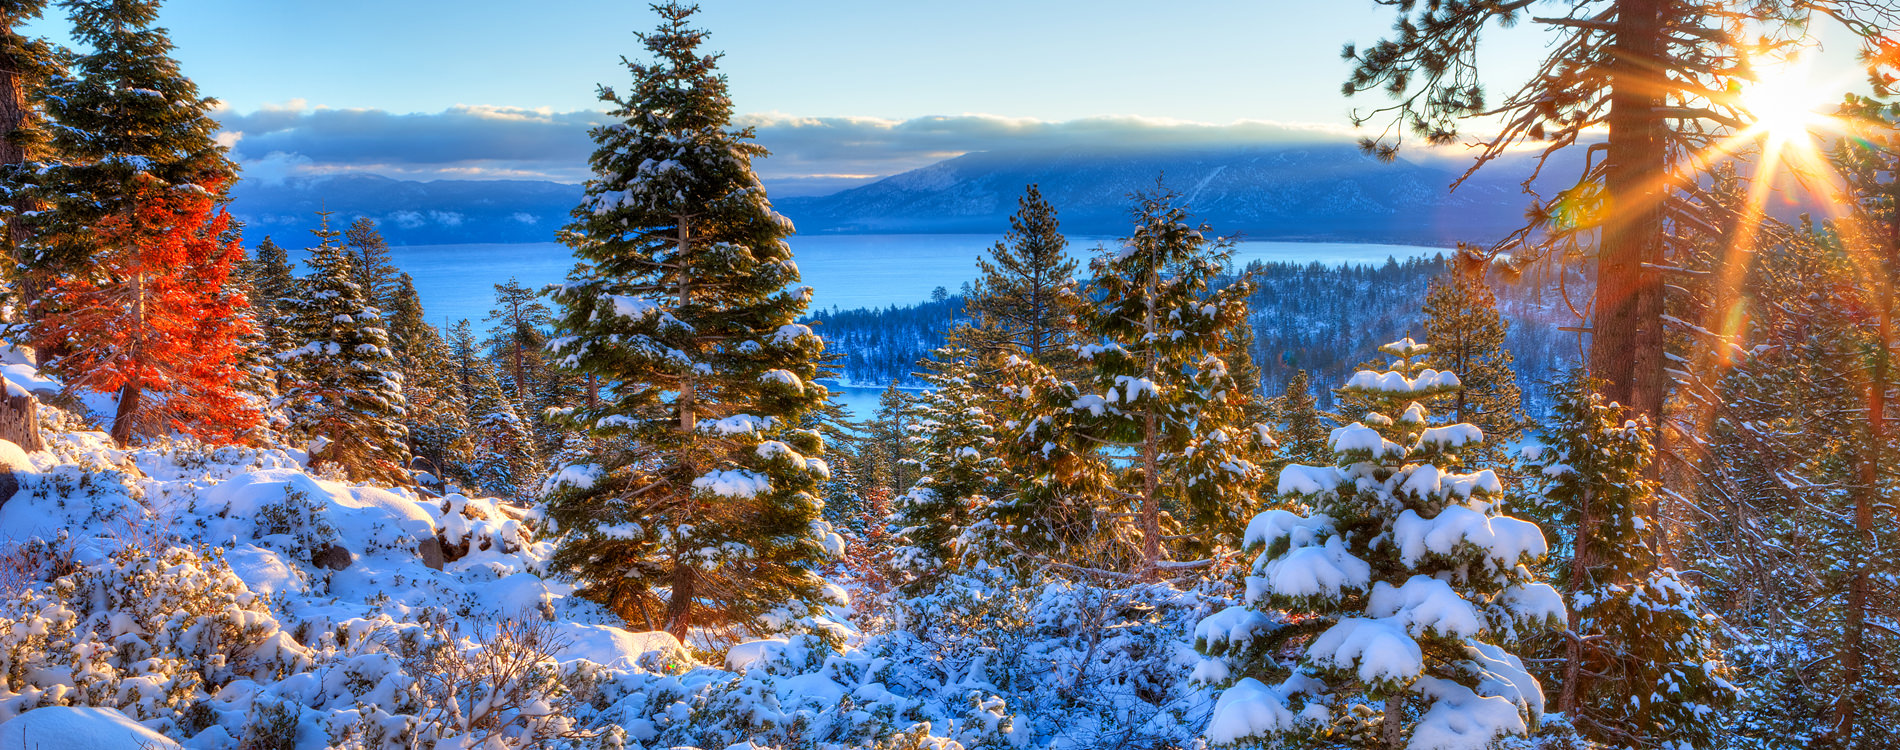 Winter sunrise over Lake Tahoe California